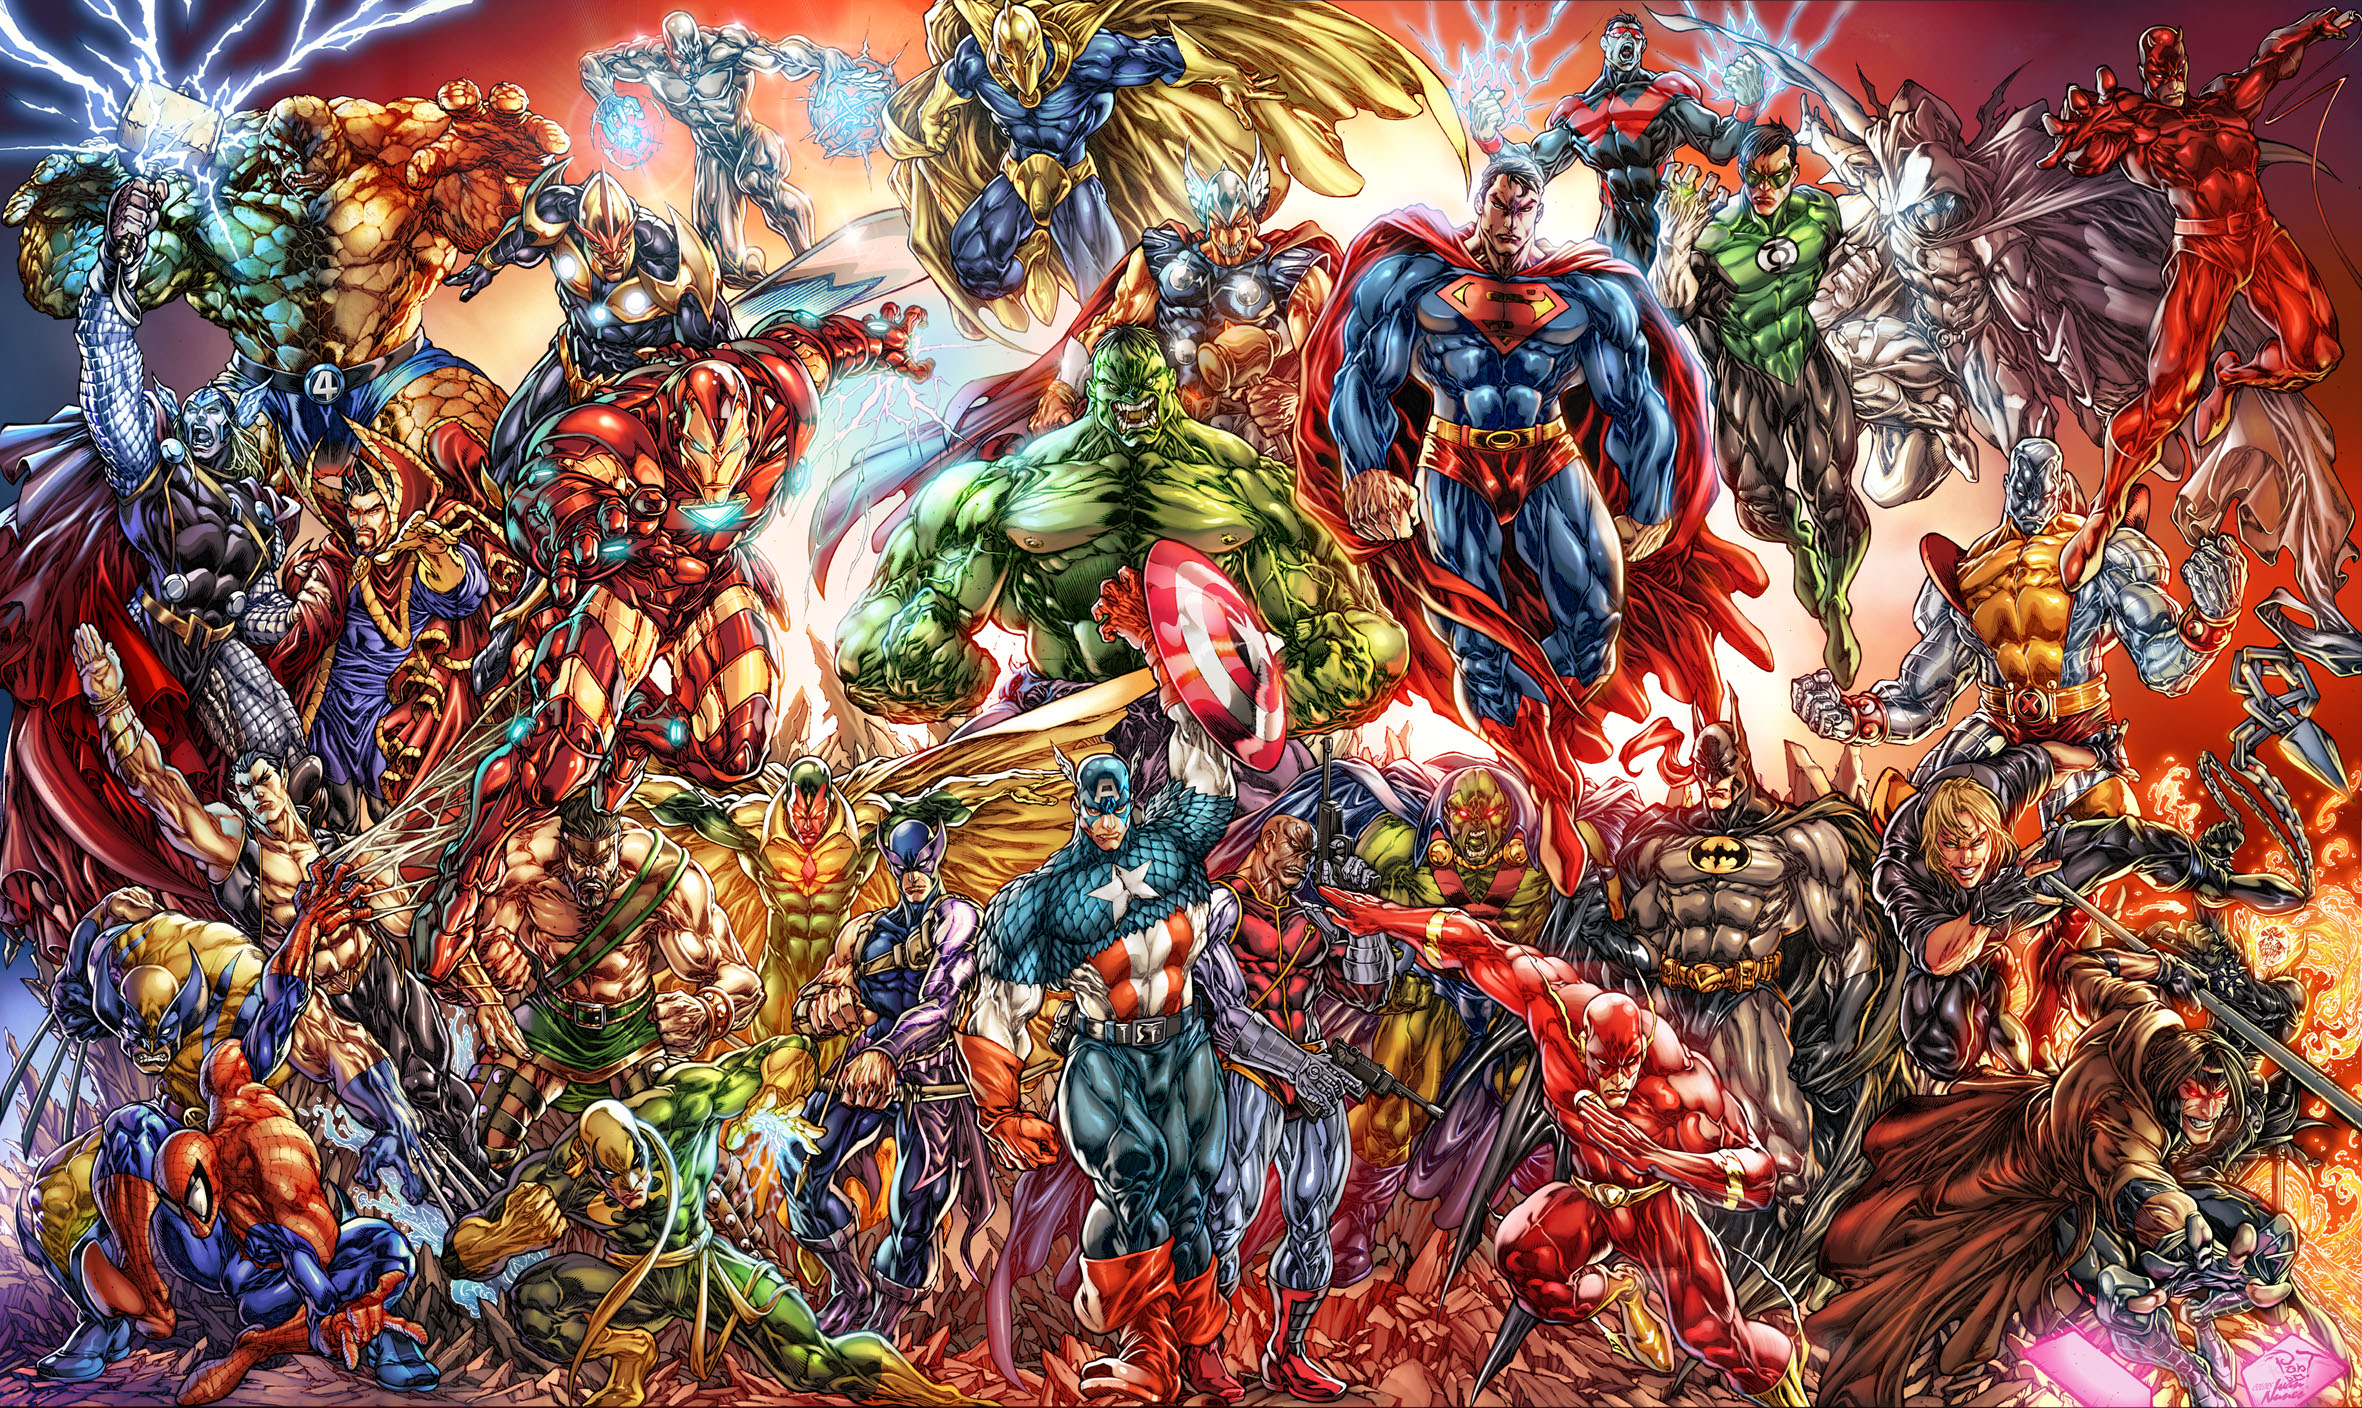 superman, comics, collage, barry allen, dc comics, batman, wolverine, ghost rider, spider man, ben grimm, beta ray bill, captain america, clint barton, colossus, danny rand, daredevil, deathlok, doctor fate (dc comics), doctor strange, flash, gambit (marvel comics), green lantern, hal jordan, hawkeye, hercules (marvel comics), hulk, iron fist (marvel comics), iron man, j'onn j'onzz, longshot (marvel comics), martian manhunter, moon knight, namor the sub mariner, nightwing, nova (marvel comics), peter parker, silver surfer, sub mariner, thing (marvel comics), thor, vision (marvel comics), wonder man